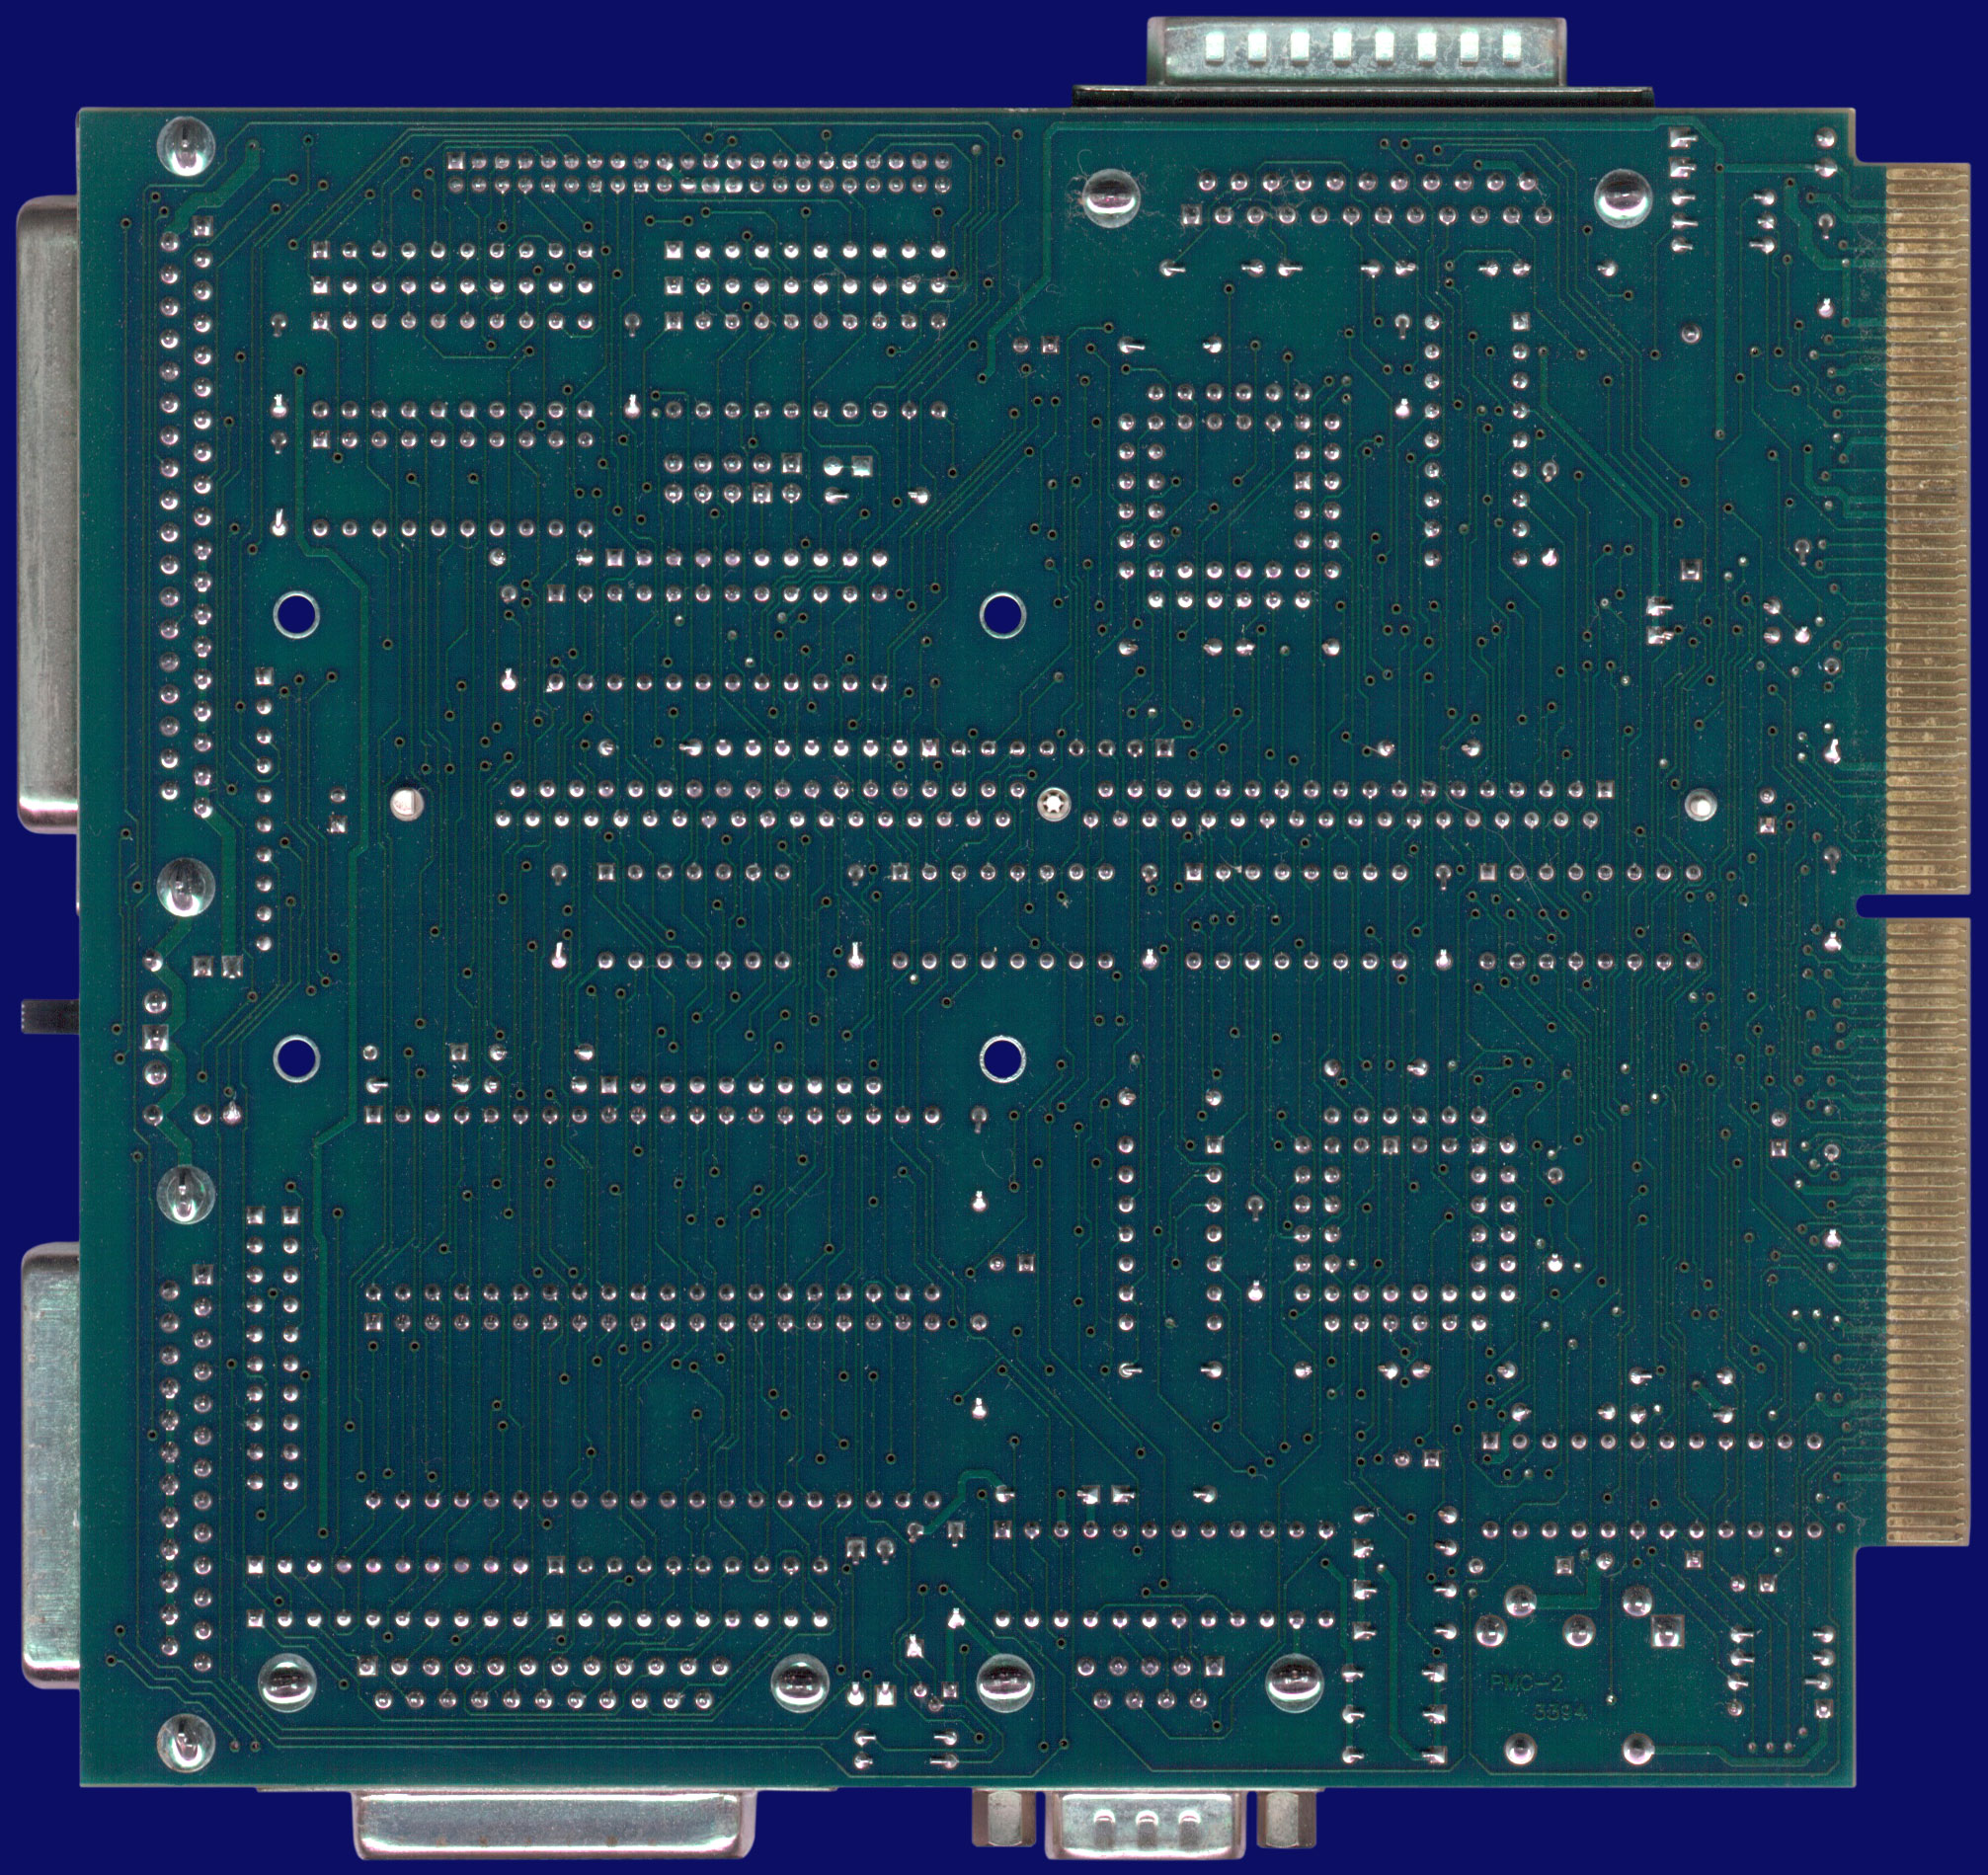 Paravision / Microbotics SX-1 - Main board, back side